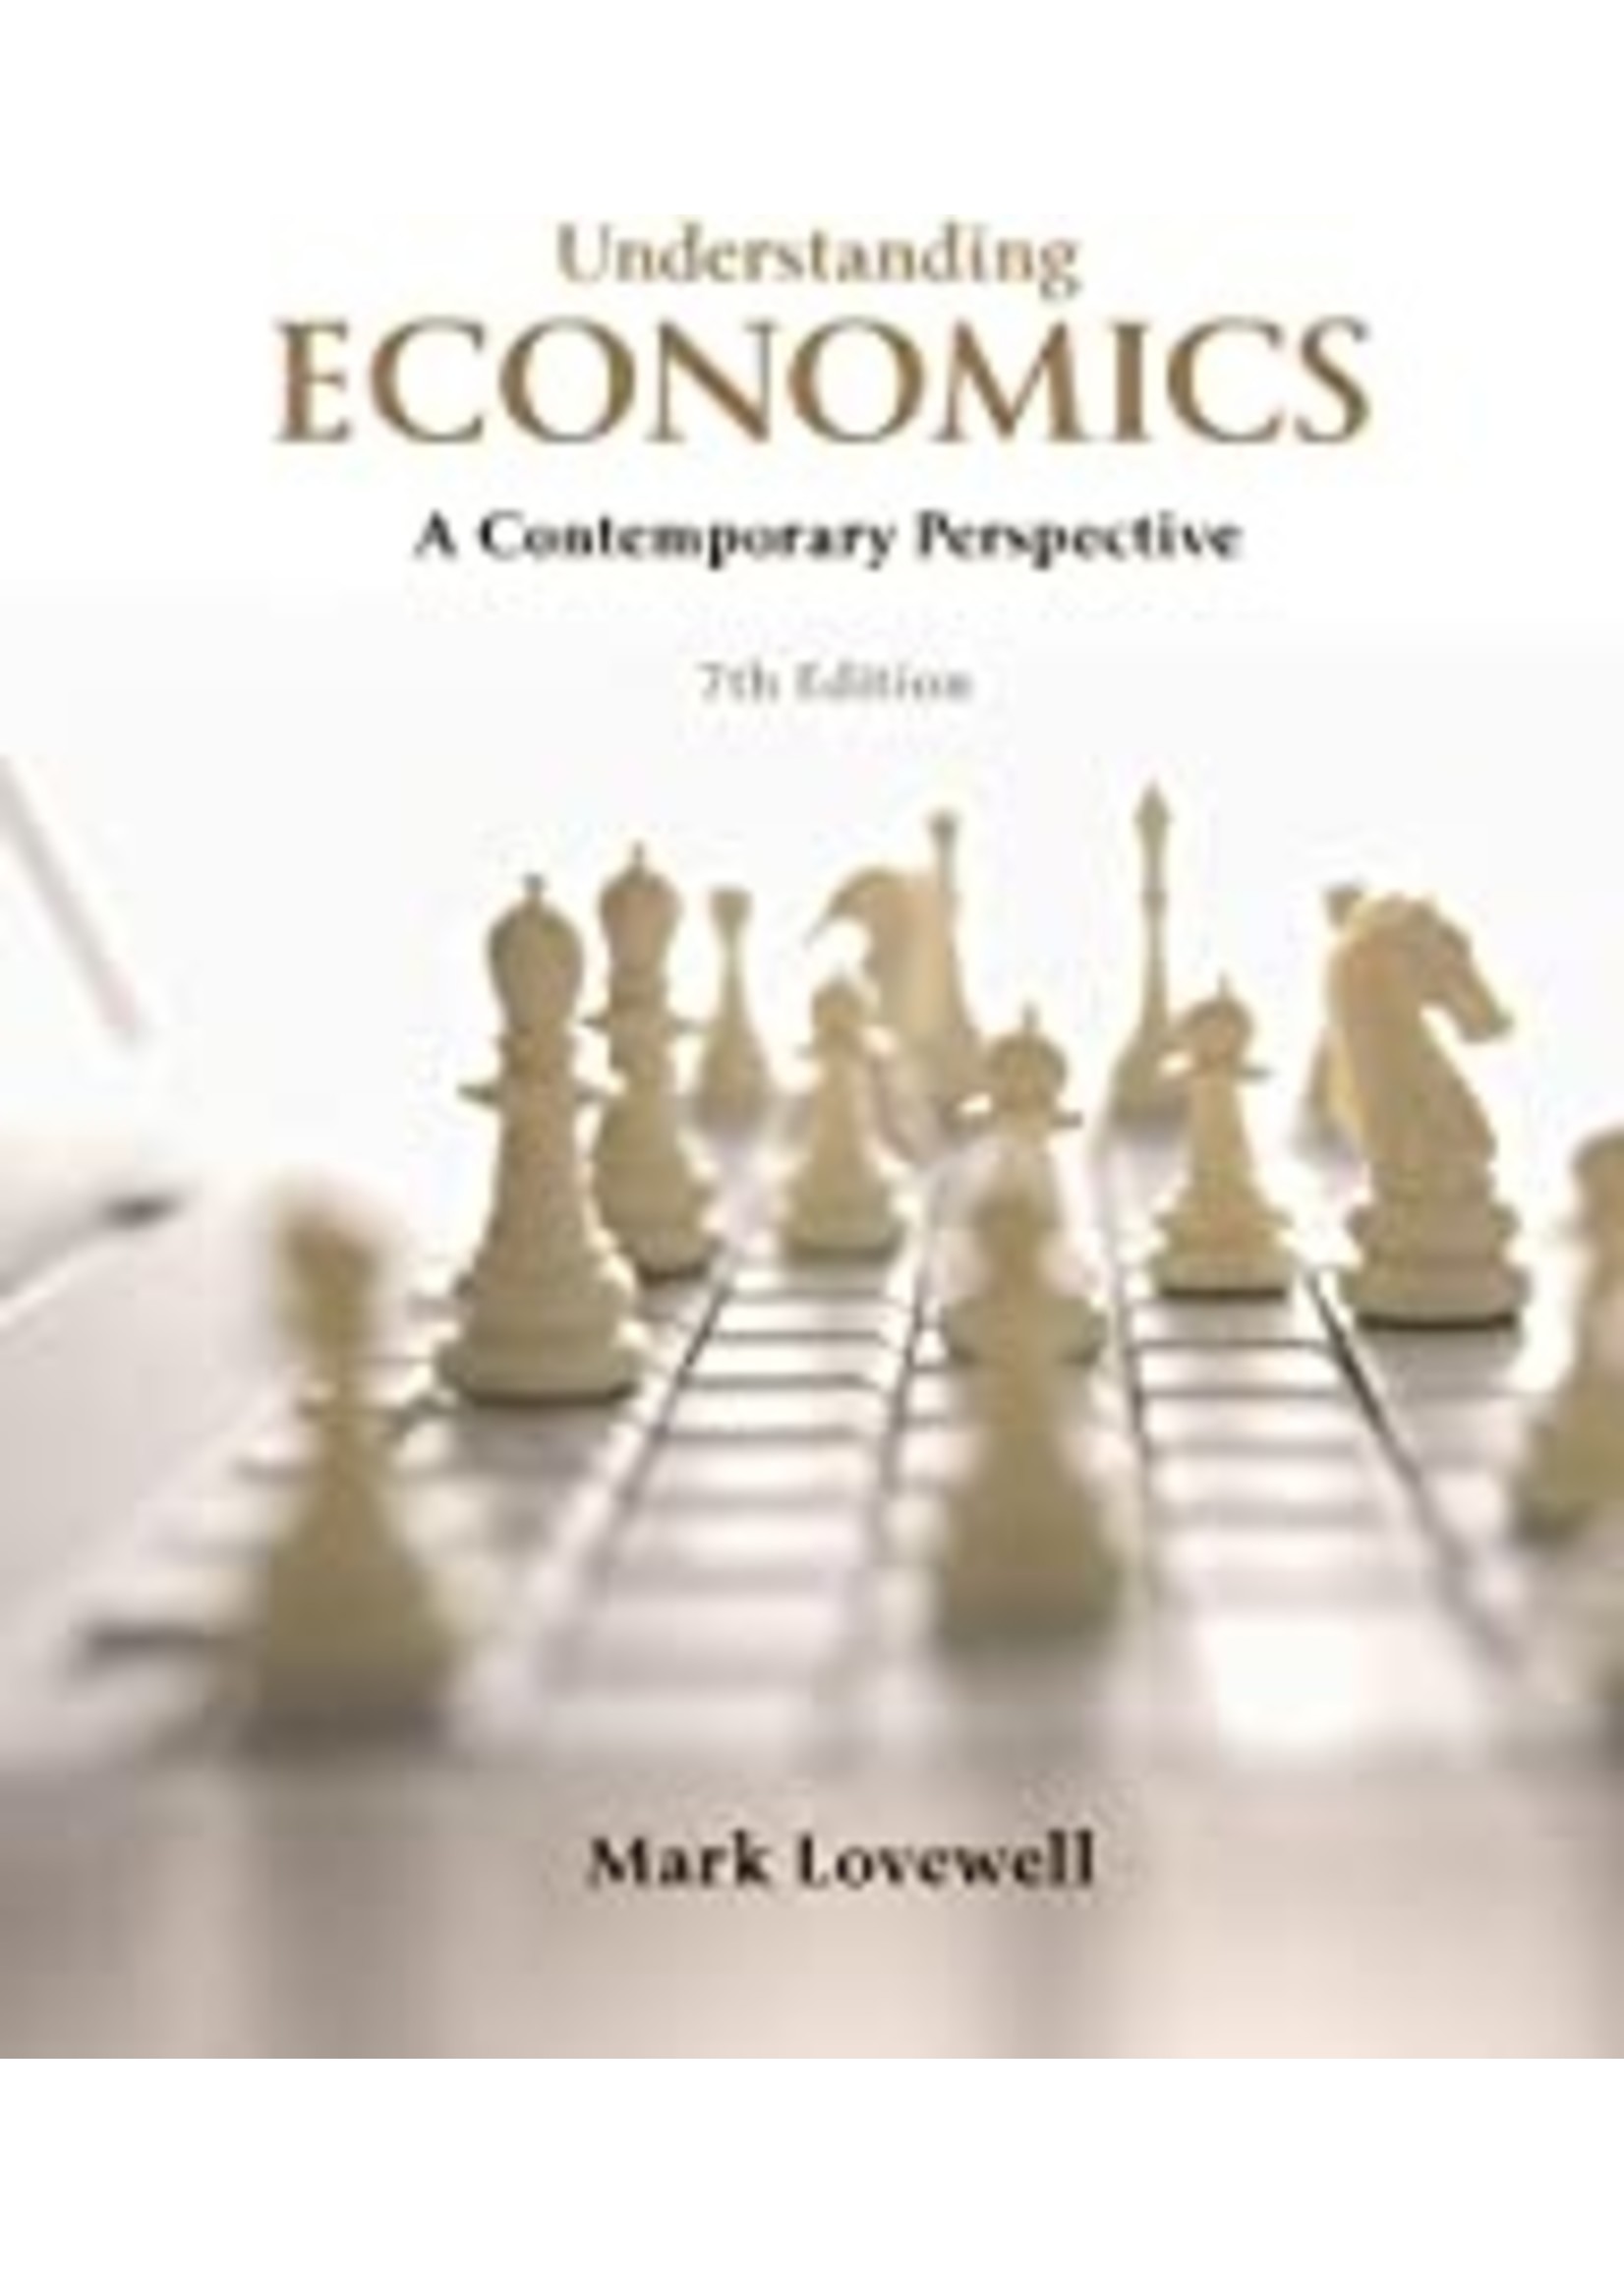 G12 RENTAL - Economics - Understanding Economics 7th Edition